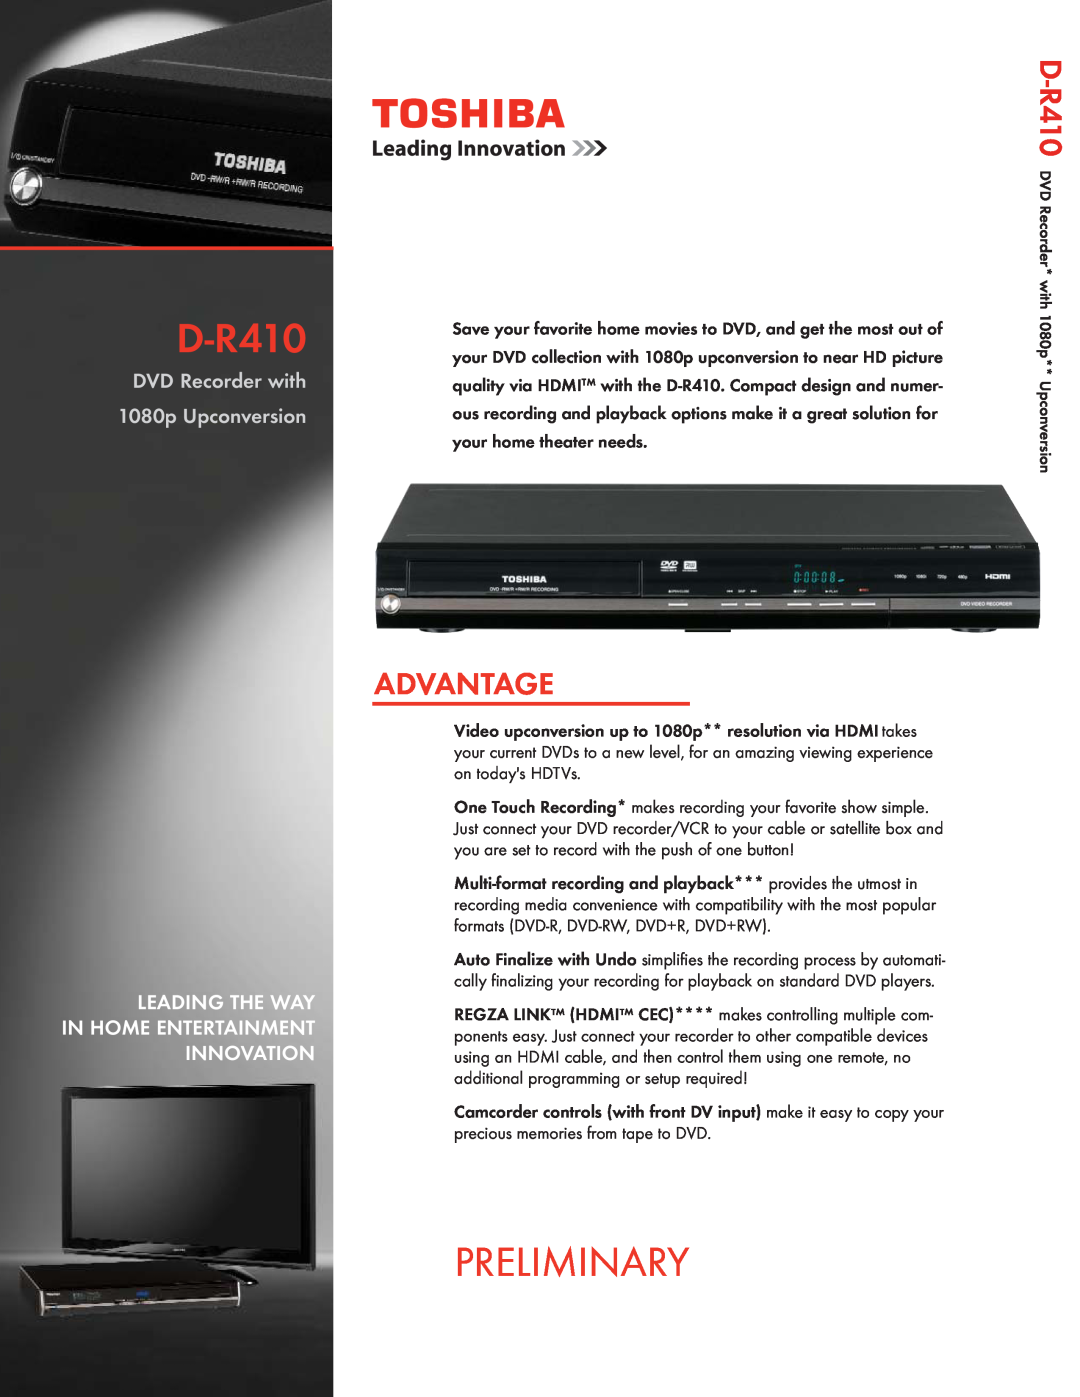 Toshiba D-R410 manual Preliminary, Advantage, DVD Recorder with 1080p Upconversion 